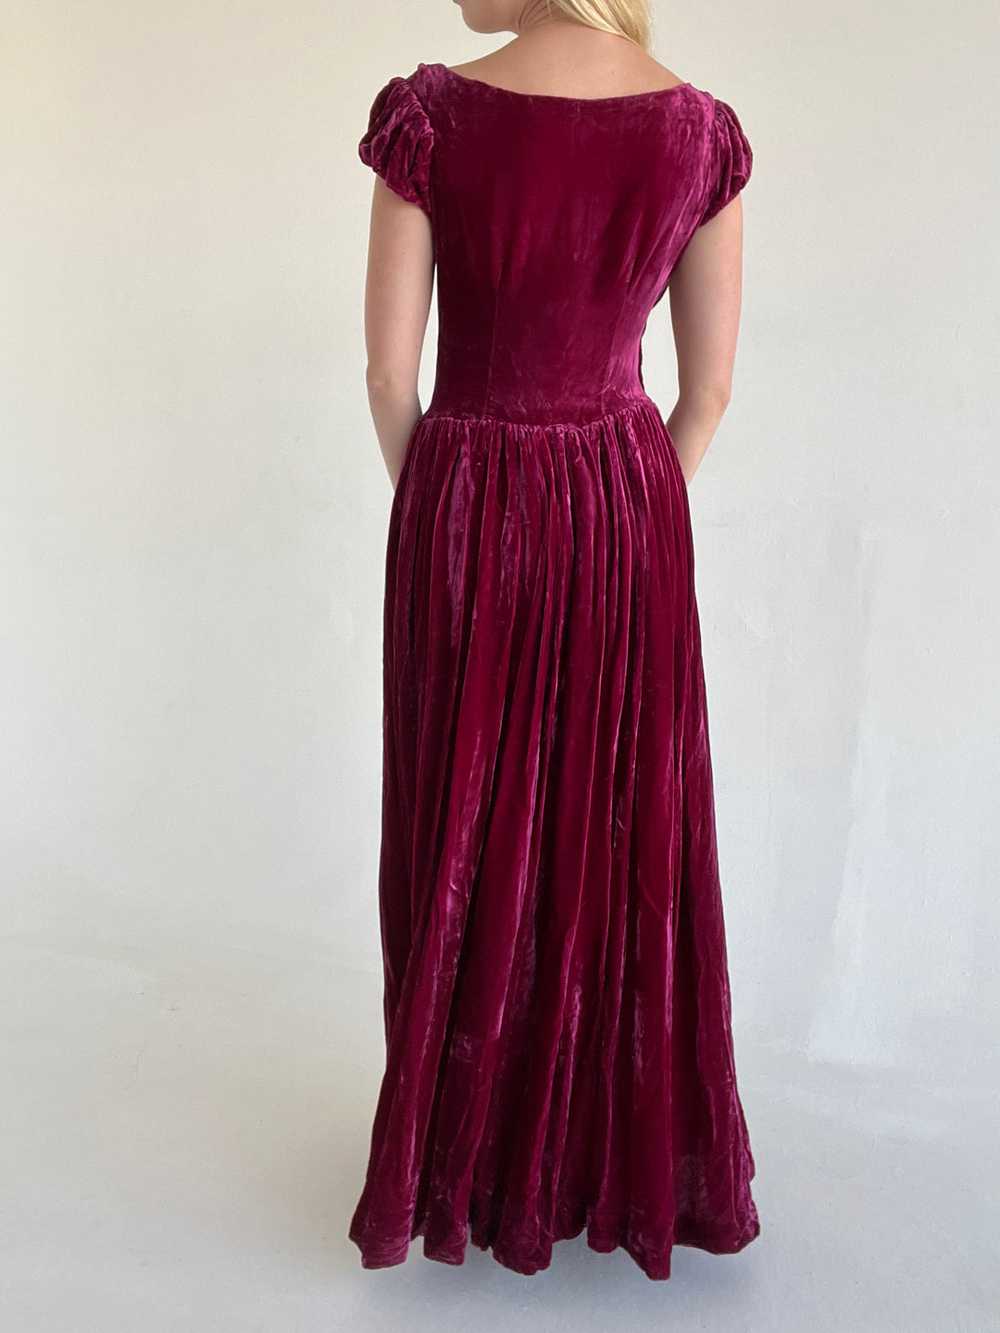 1930's Cap Sleeve Raspberry Crushed Velvet Gown - image 6